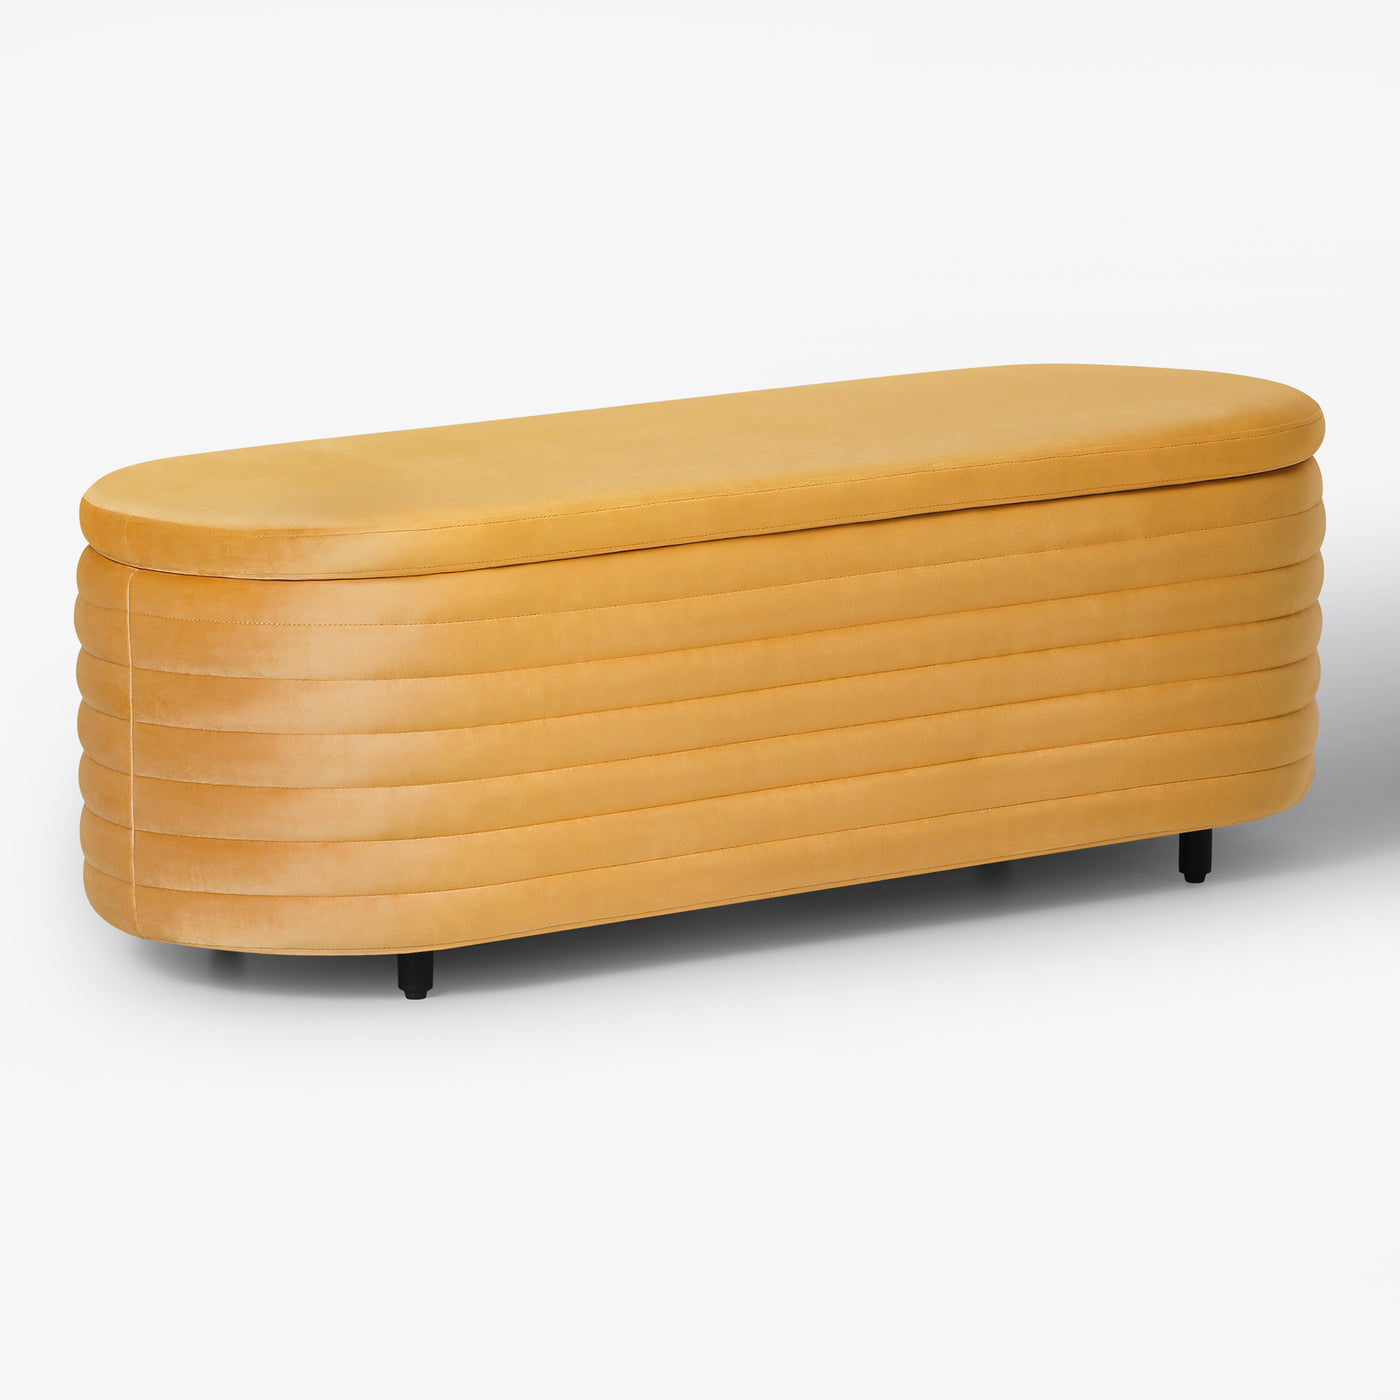 Phoebe 54" Wide Mid-Century Modern Upholstered Velvet Tufted Oval Storage Ottoman Bench